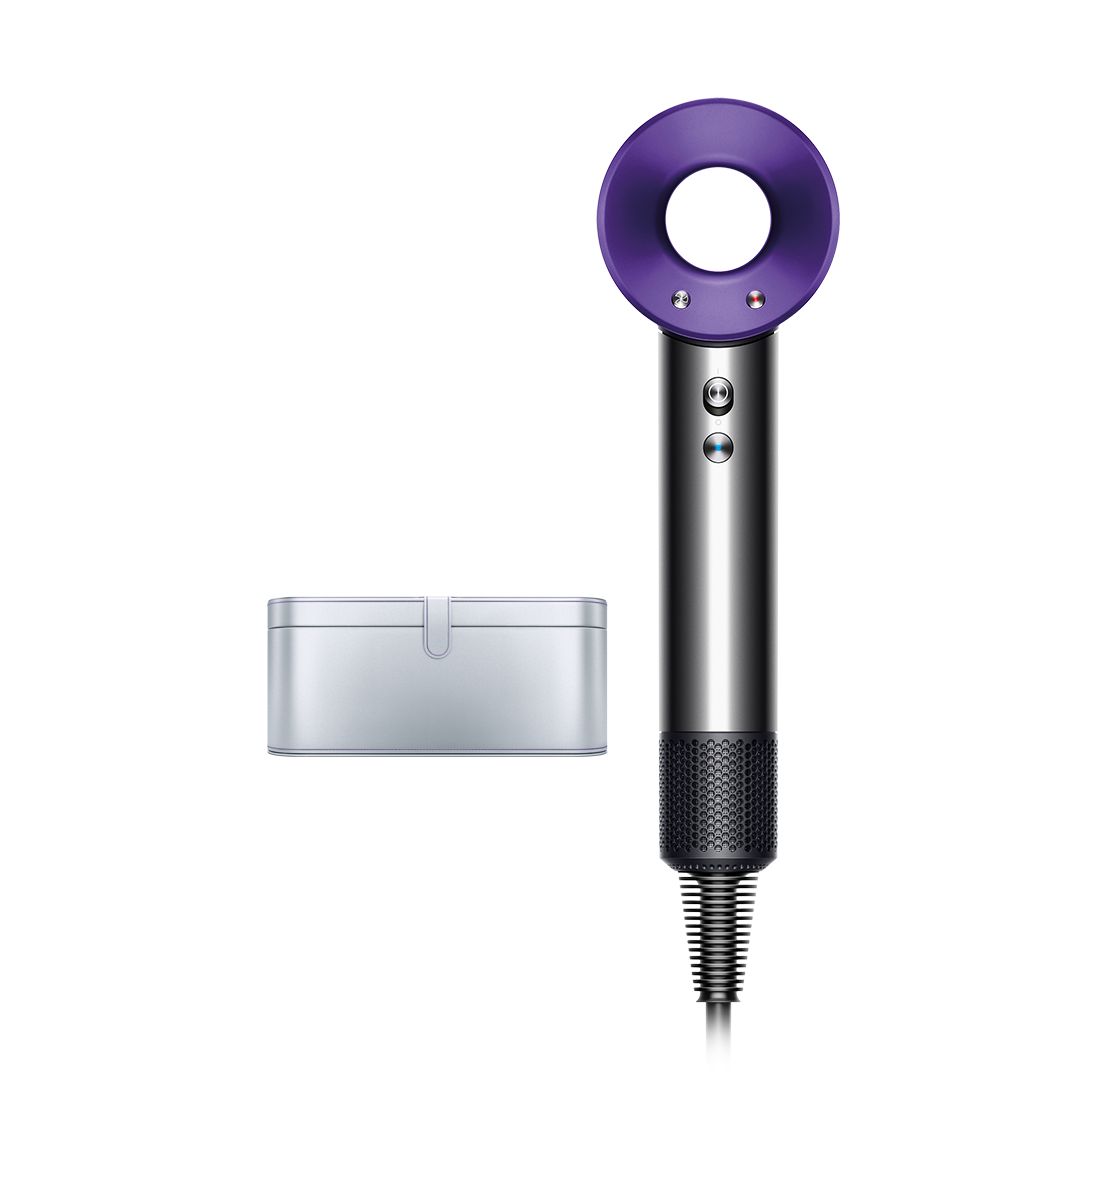 Dyson Supersonic™ hair dryer in black/purple